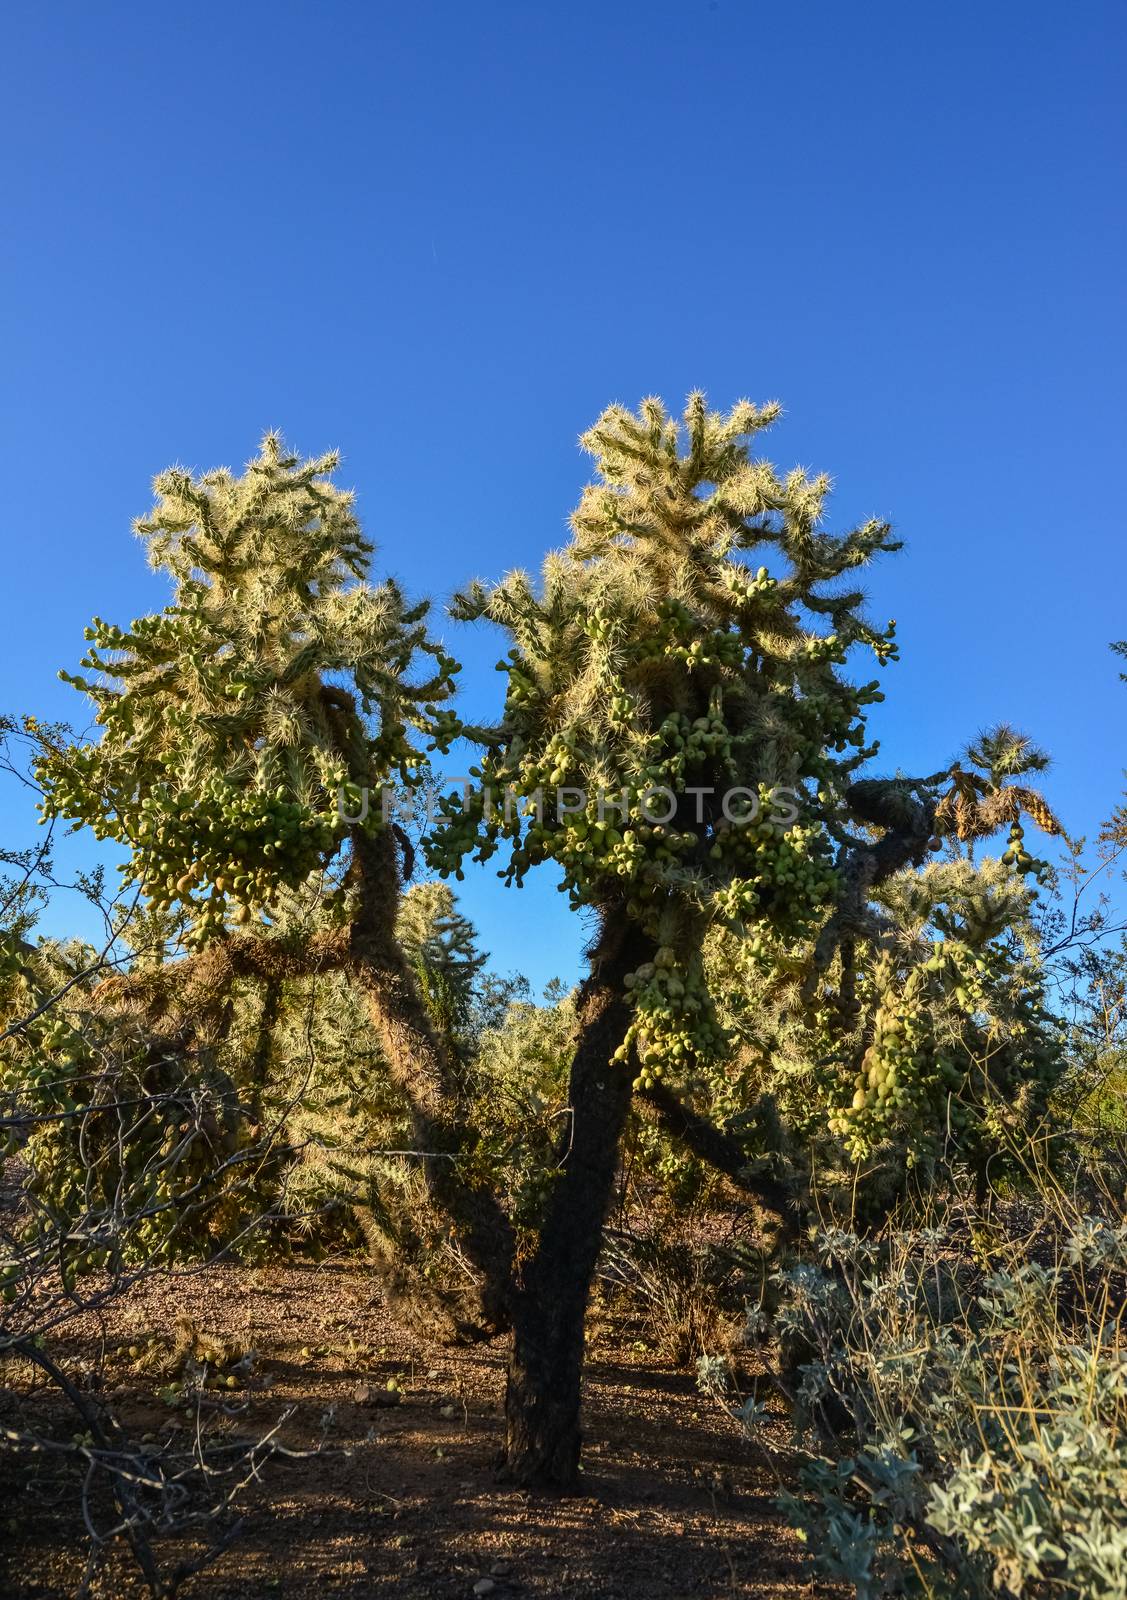 Cactus. Cane Chola Cylindropuntia spinosior by Hydrobiolog